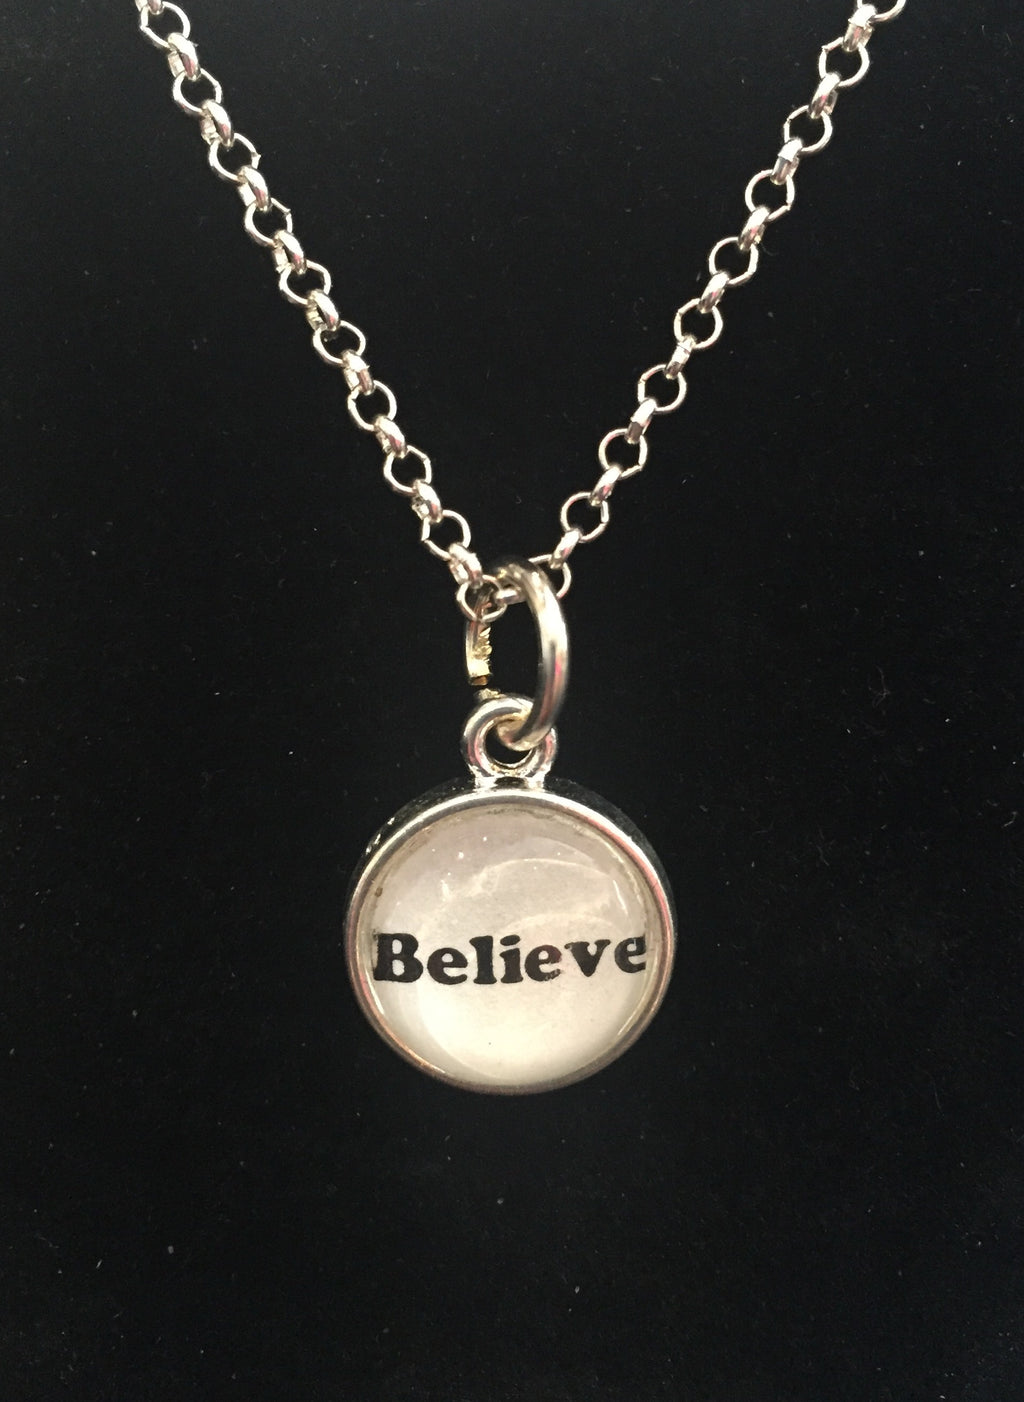 Believe Jewelry Necklace. Cleveland, Ohio. Believeland